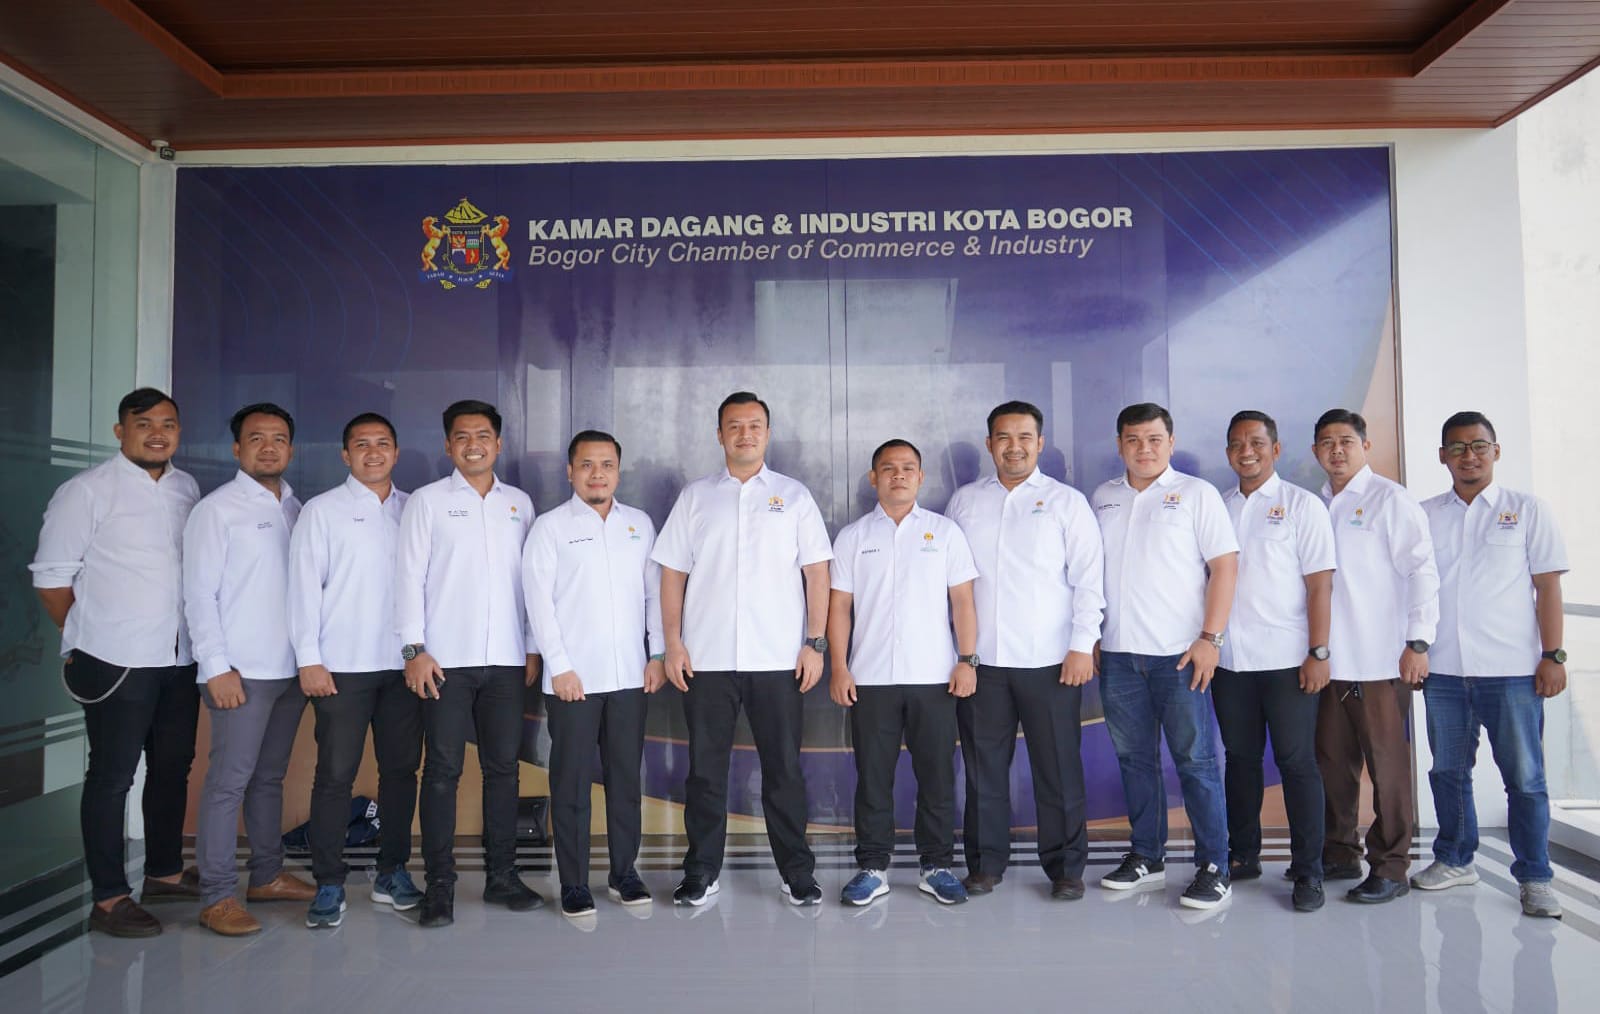 Kolaborasi HIPMI dan Kadin Perkuat Pengelolaan Usaha di Kota Bogor